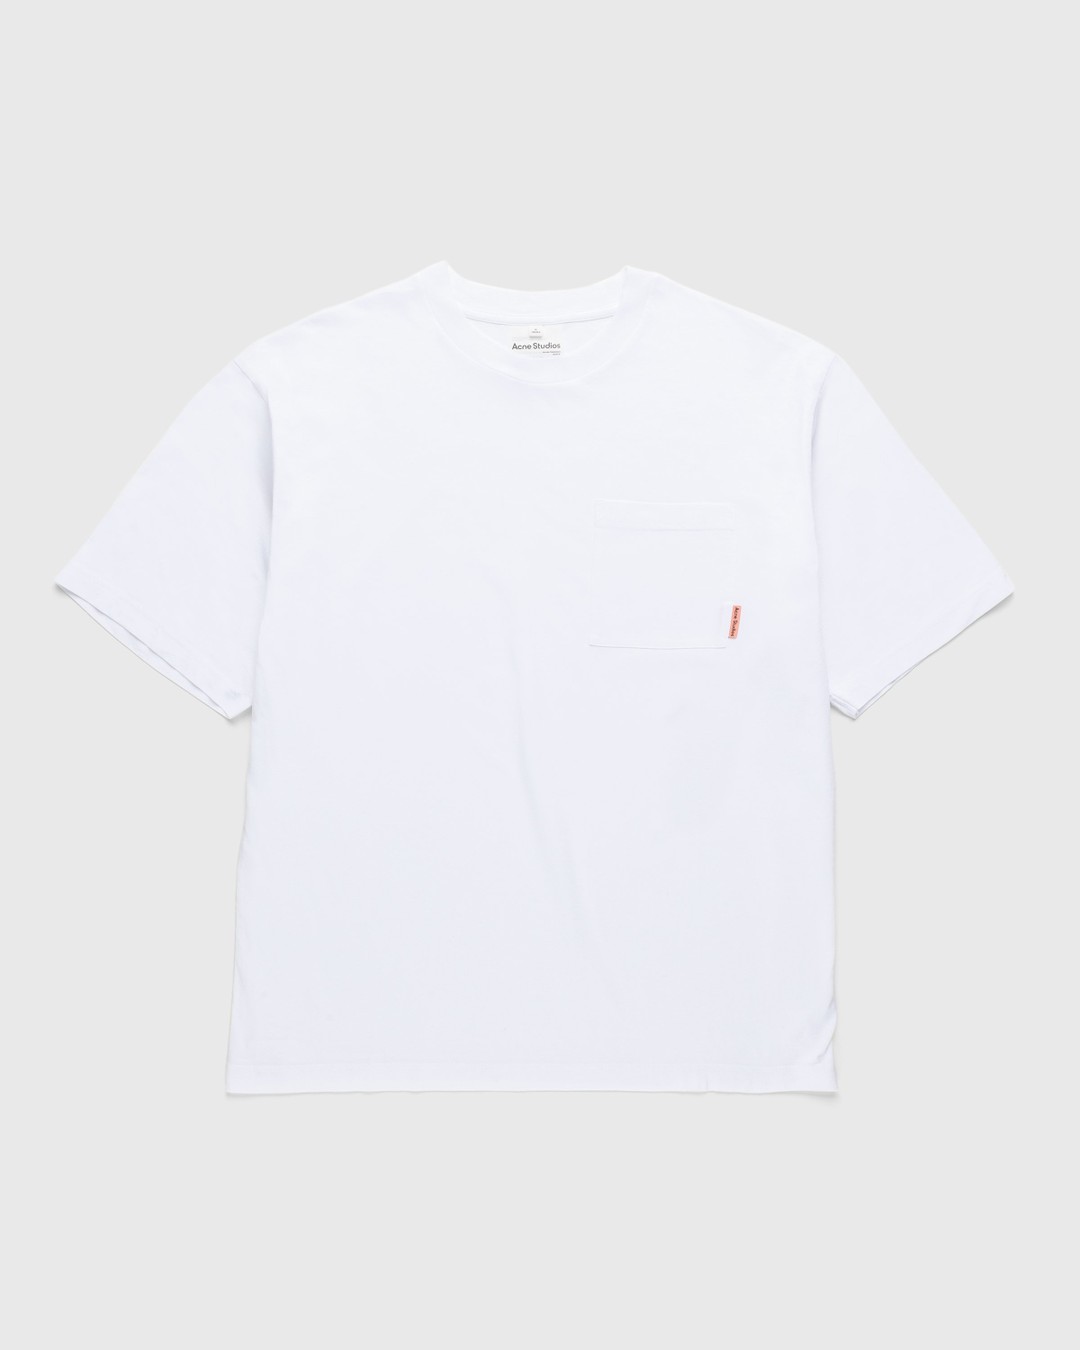 Acne Studios – Organic Cotton Pocket T-Shirt White - T-Shirts - White - Image 1